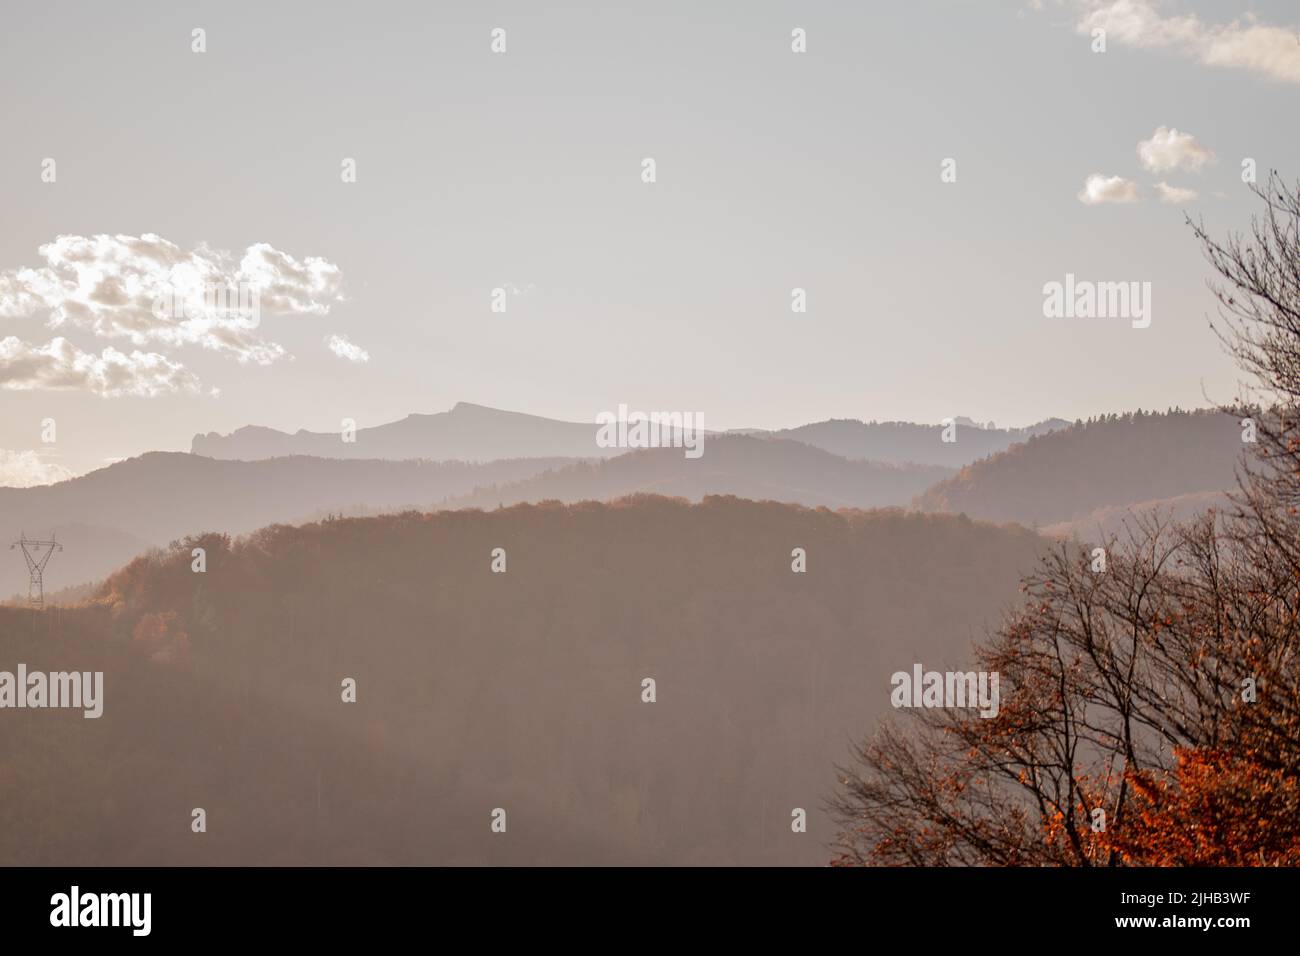 A silhouette of hills in Piatra Neamt, Romania on the sunrise Stock Photo